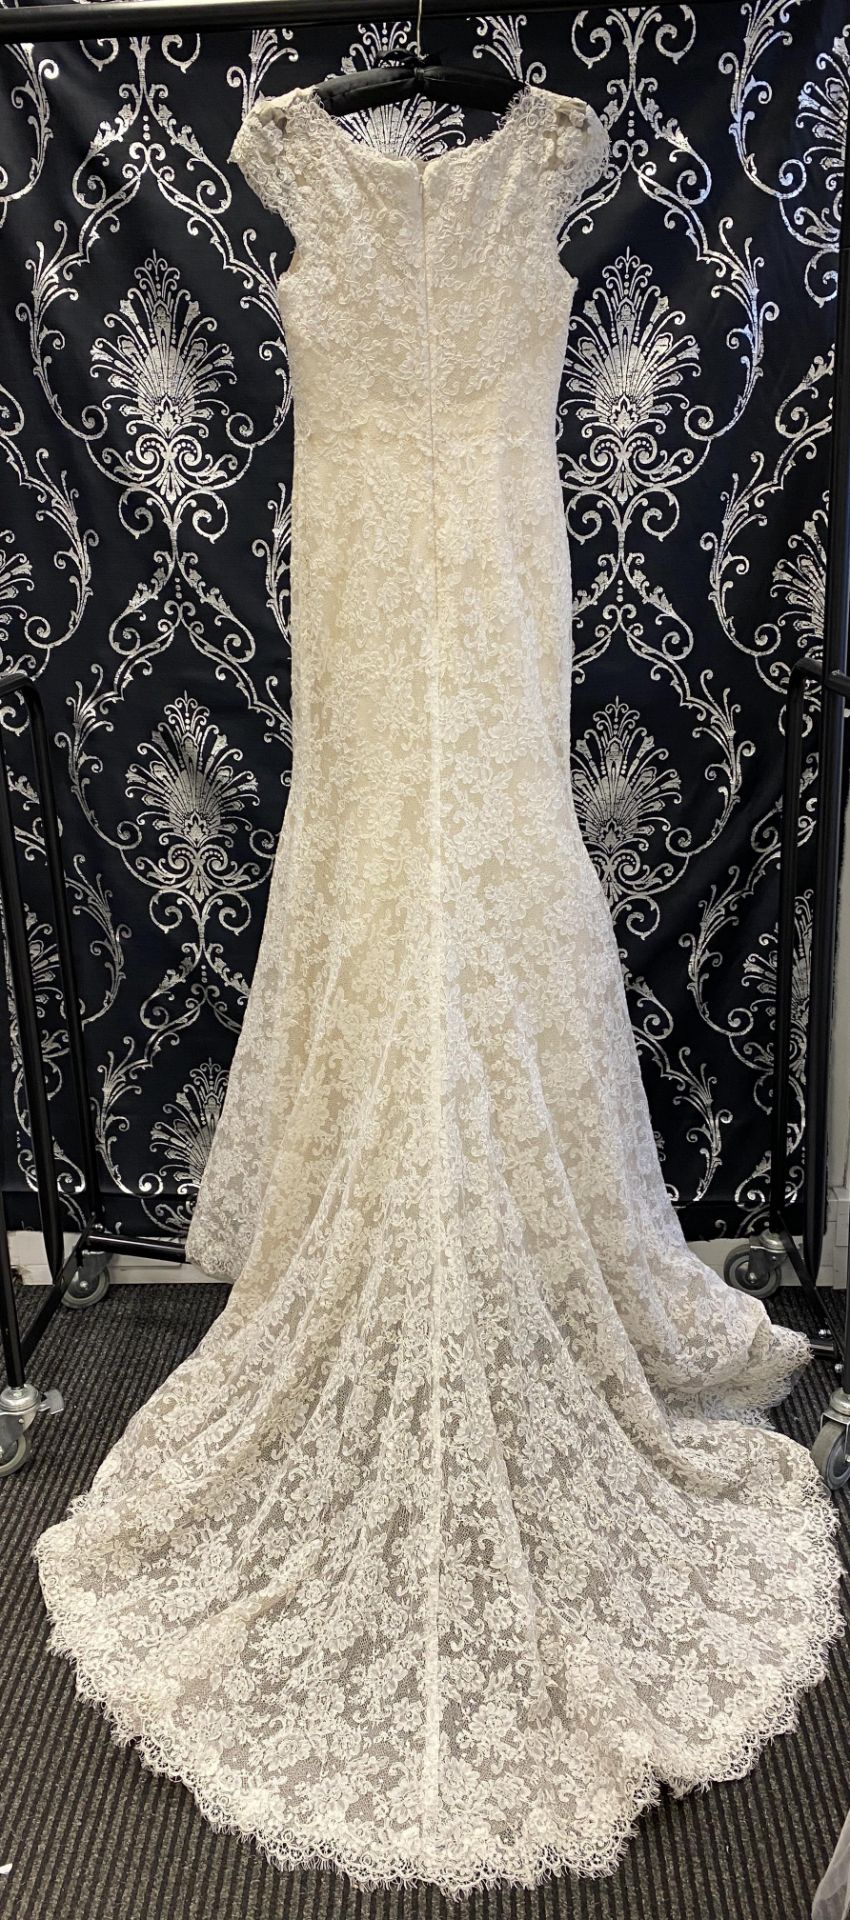 1 x ANNA SUL Y 'White Rose' Full Lace Mermaid Style Designer Wedding Dress RRP £1,250 - Image 6 of 11